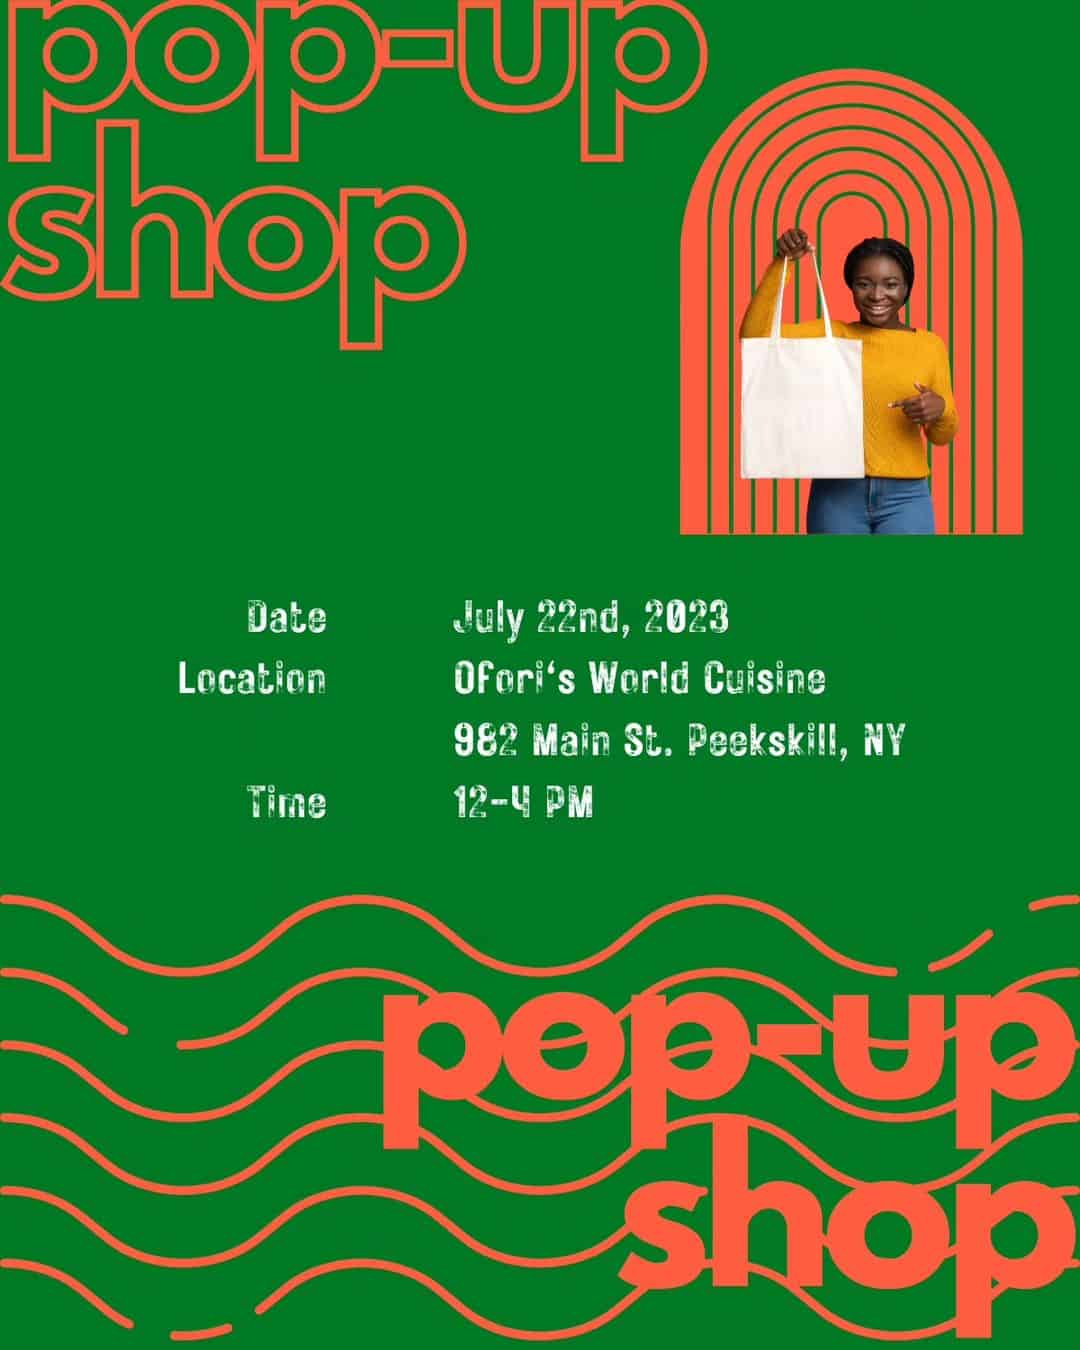 Flier for Peekskill Pop-up Shop at Ofori's